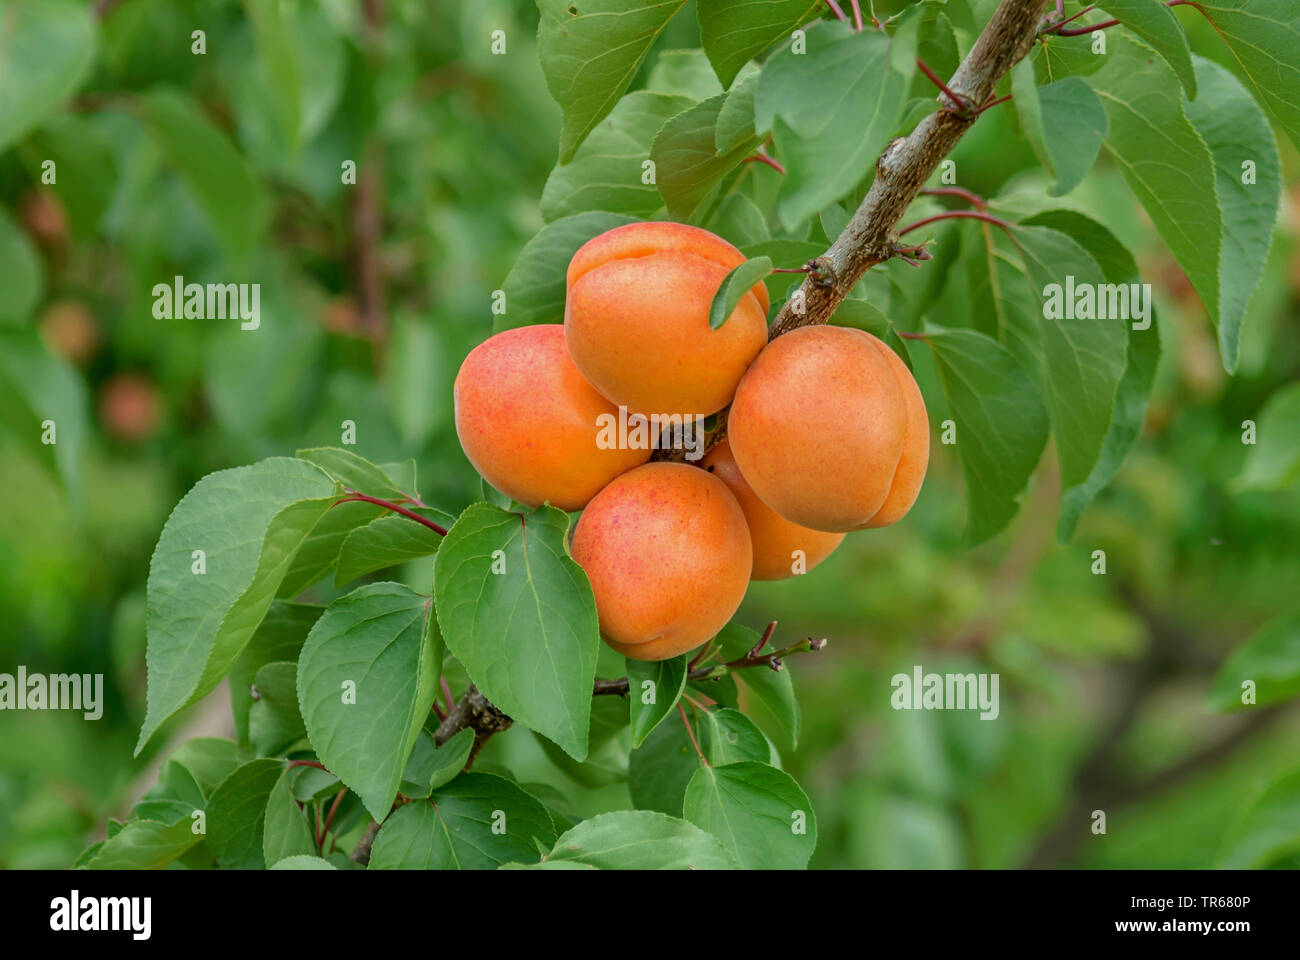 Abricotier (Prunus armeniaca 'Harlayne', Prunus armeniaca Harlayne), les abricots sur un arbre, le cultivar Harlayne Banque D'Images